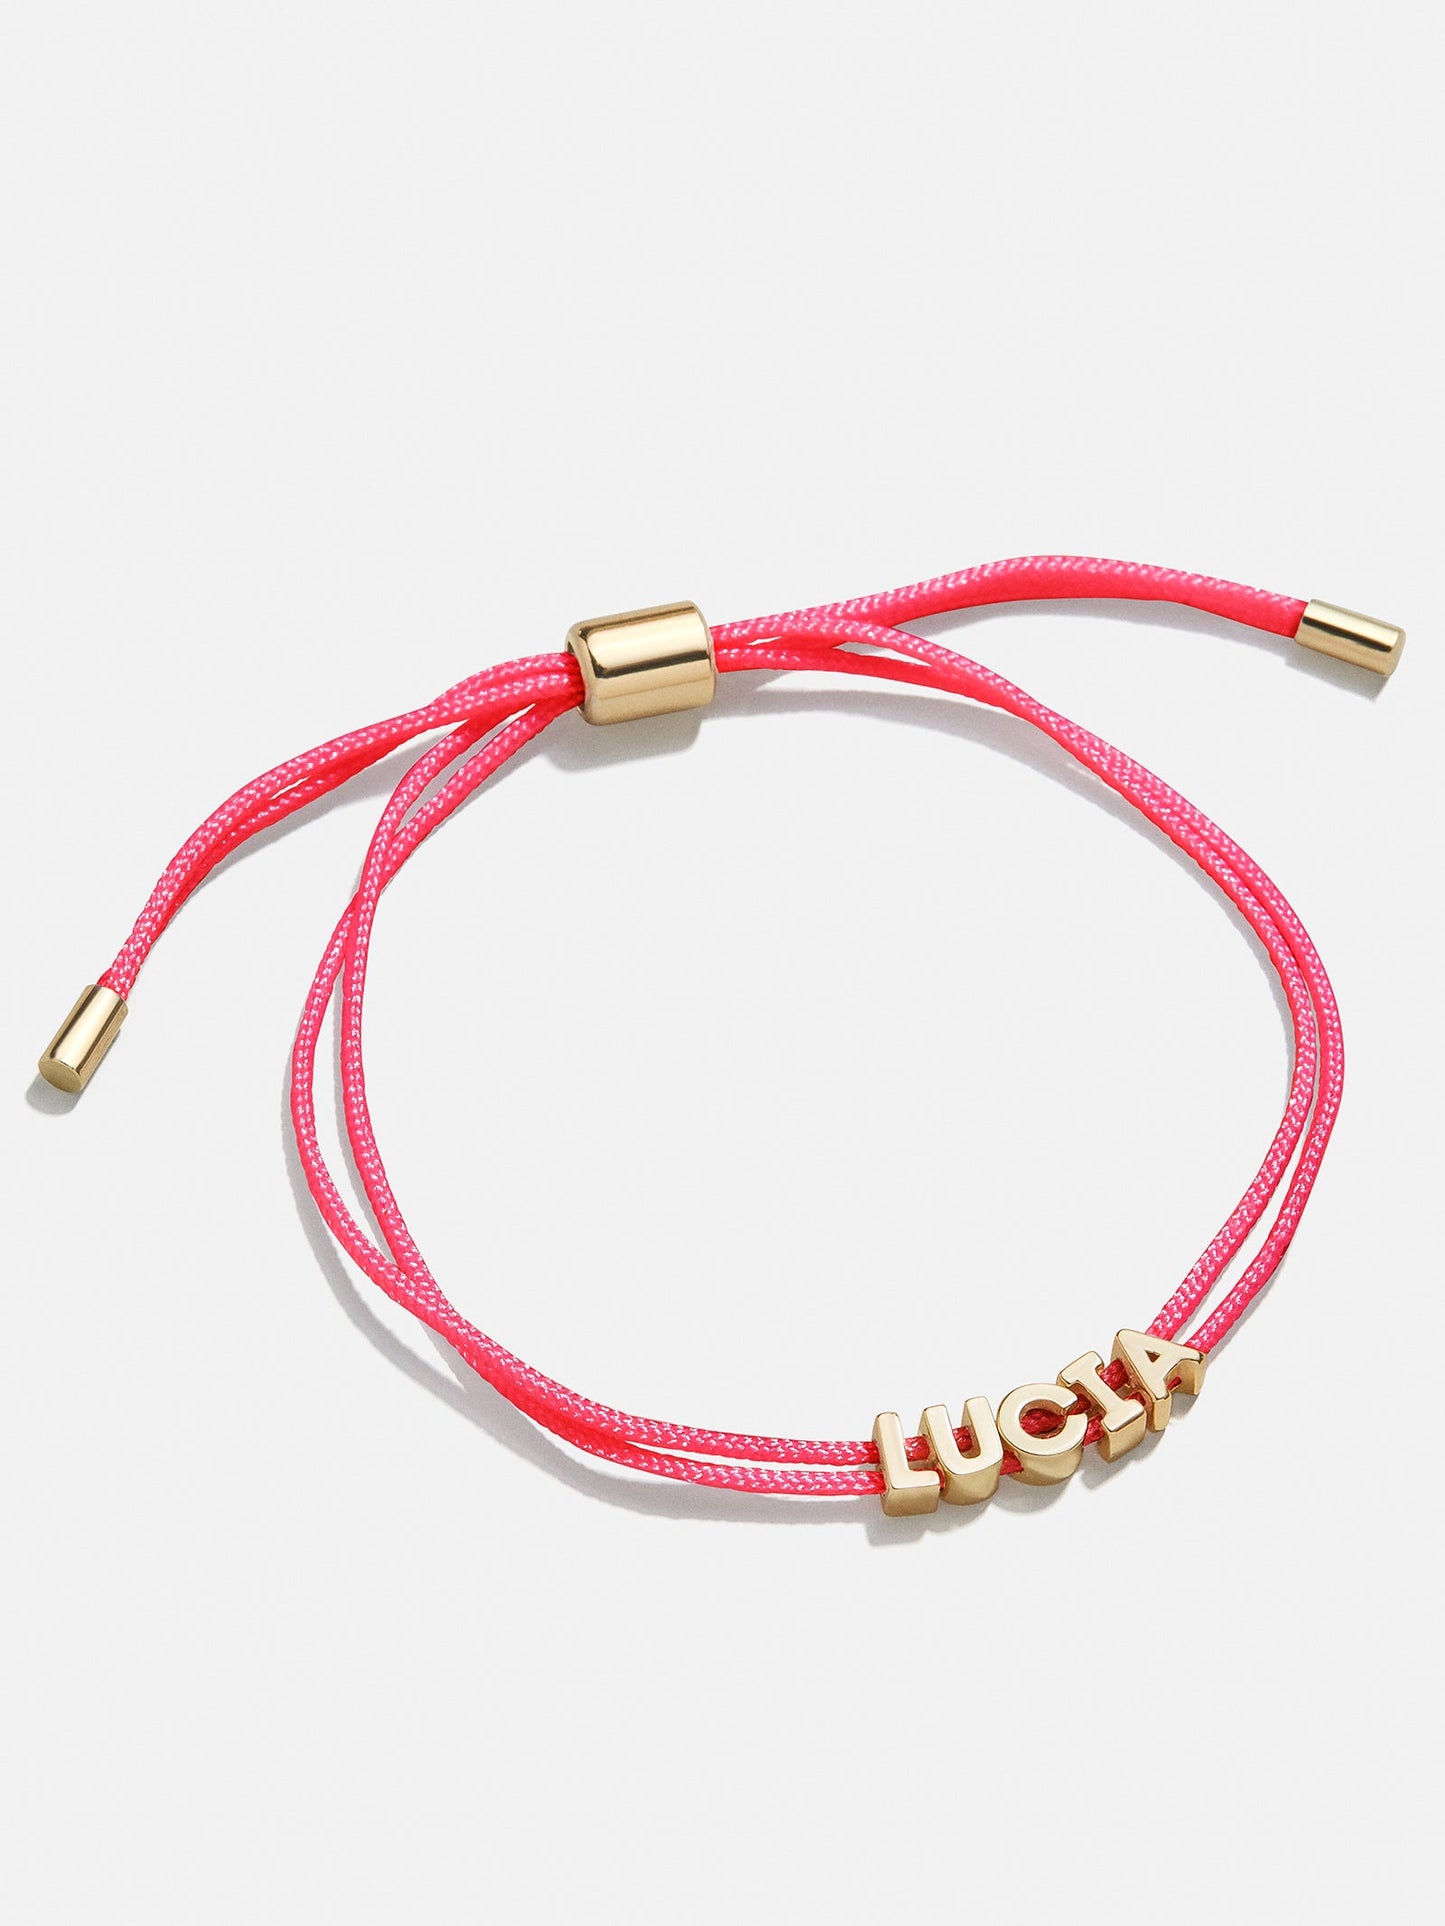 Custom Cord Bracelet - Hot Pink